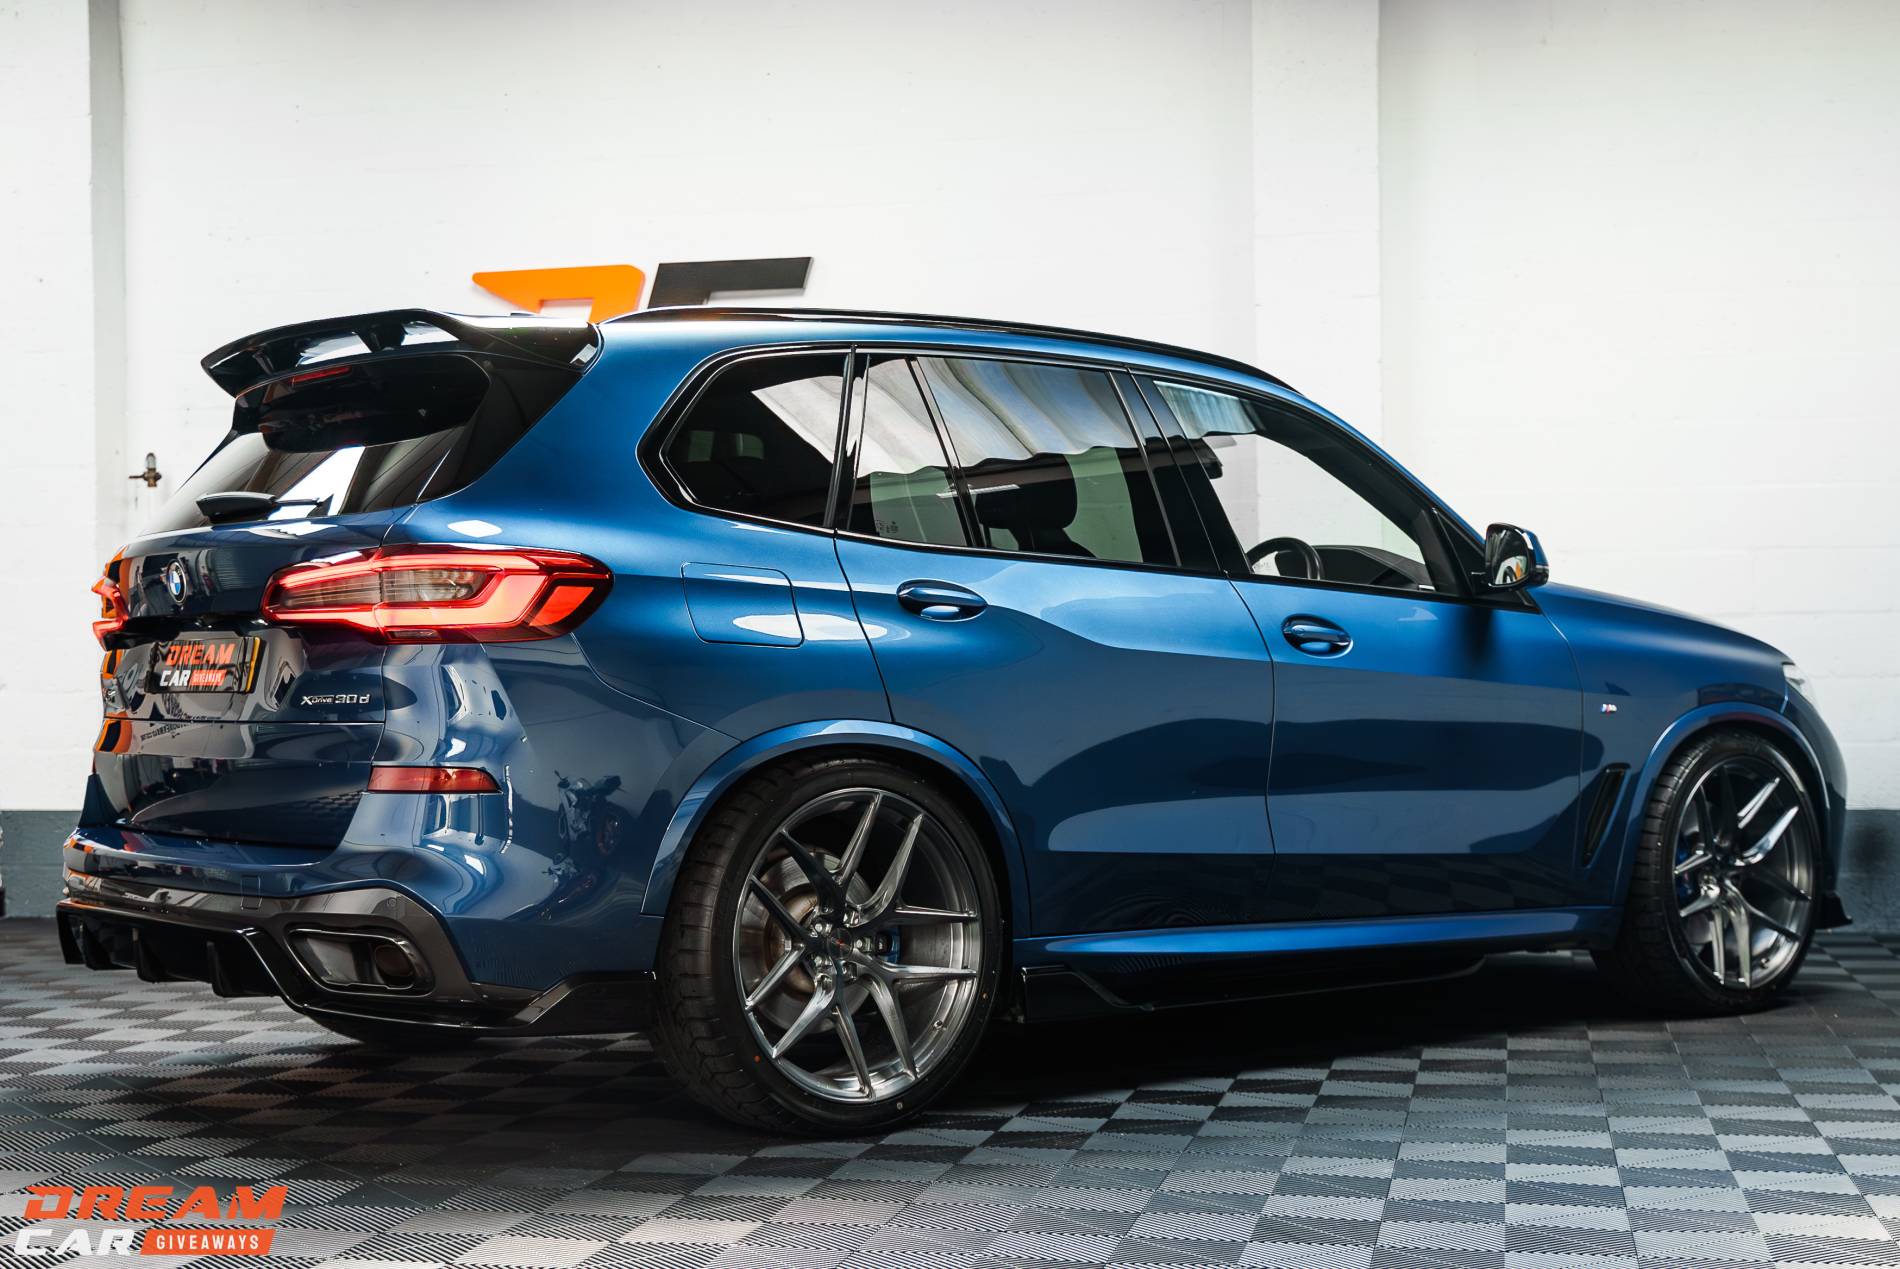 2020 BMW X5 & £1000 or £45,000 Tax Free